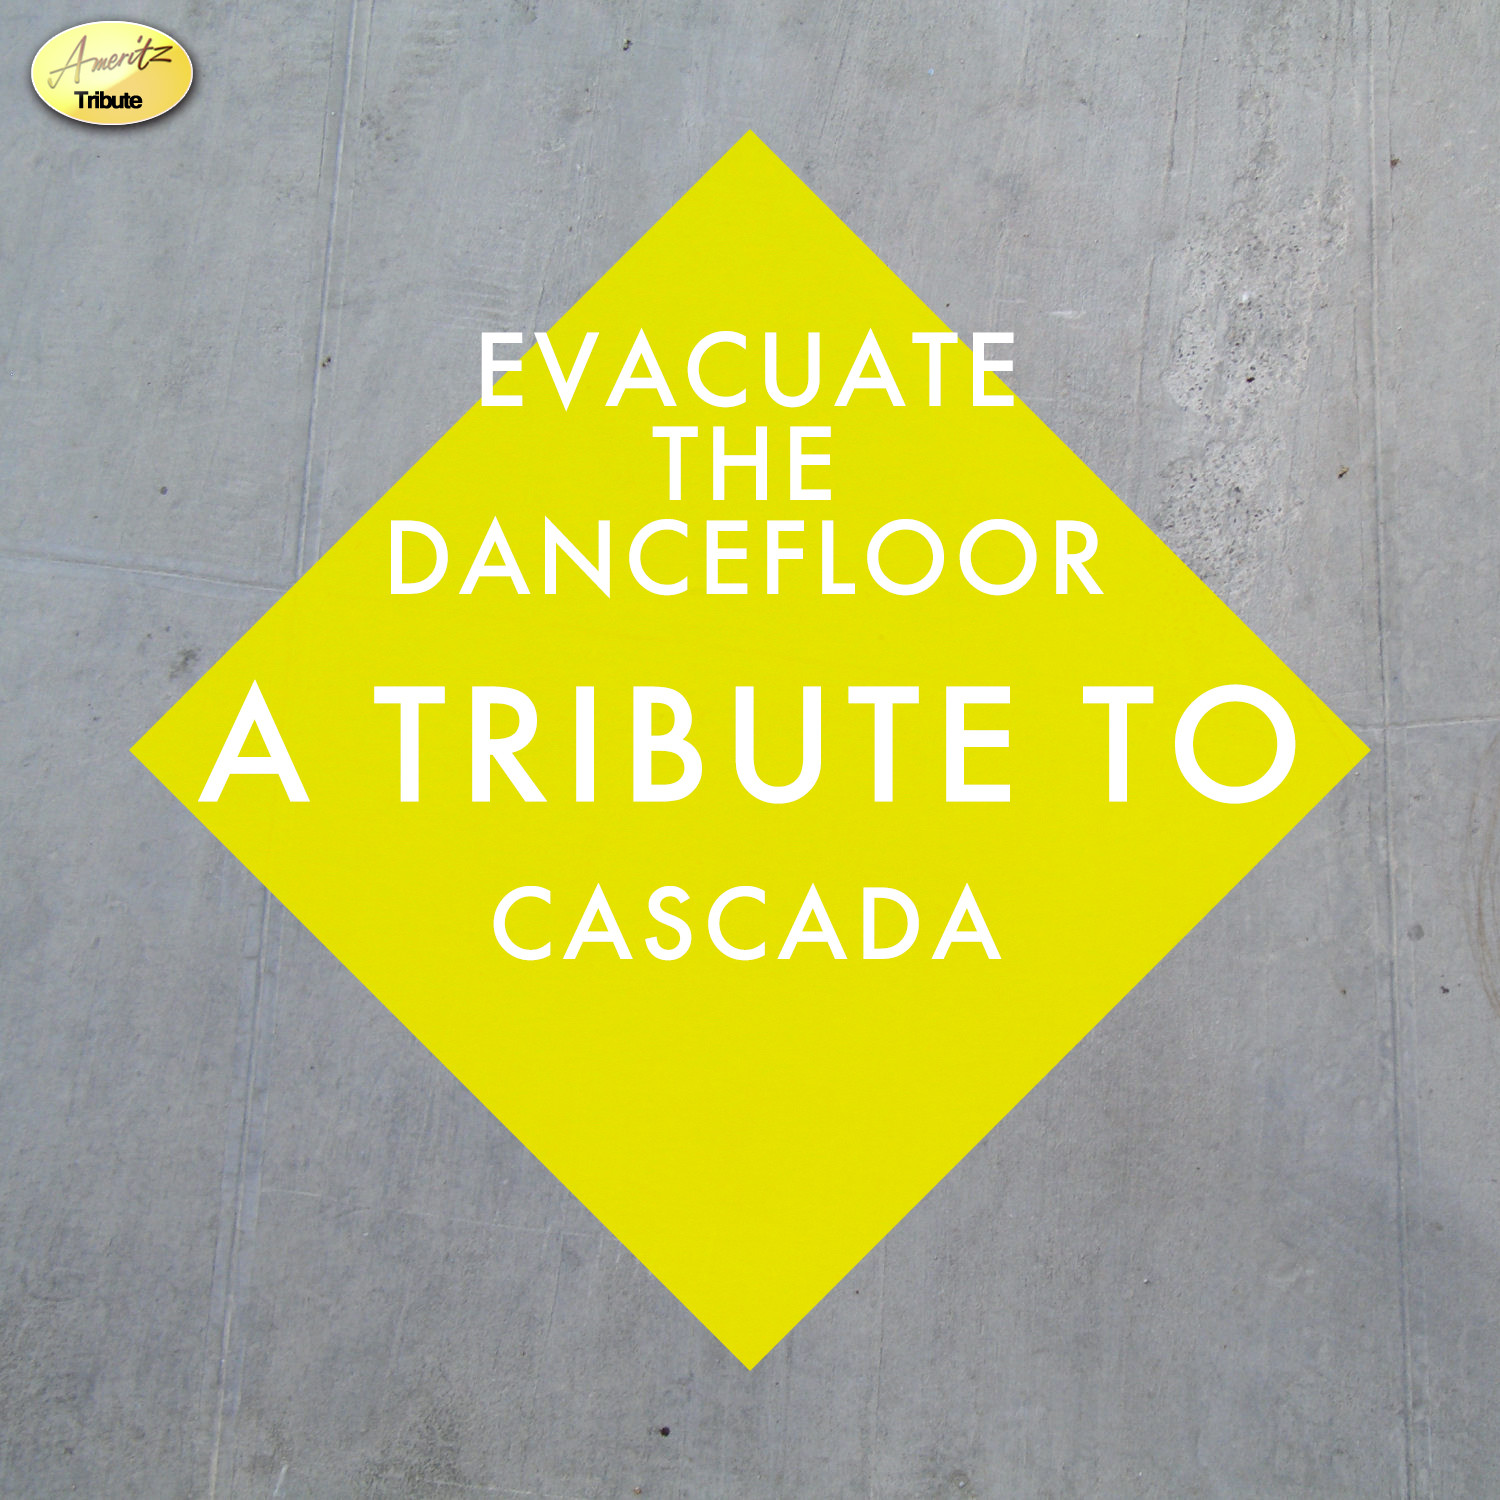 Evacuate the Dancefloor - A Tribute to Cascada